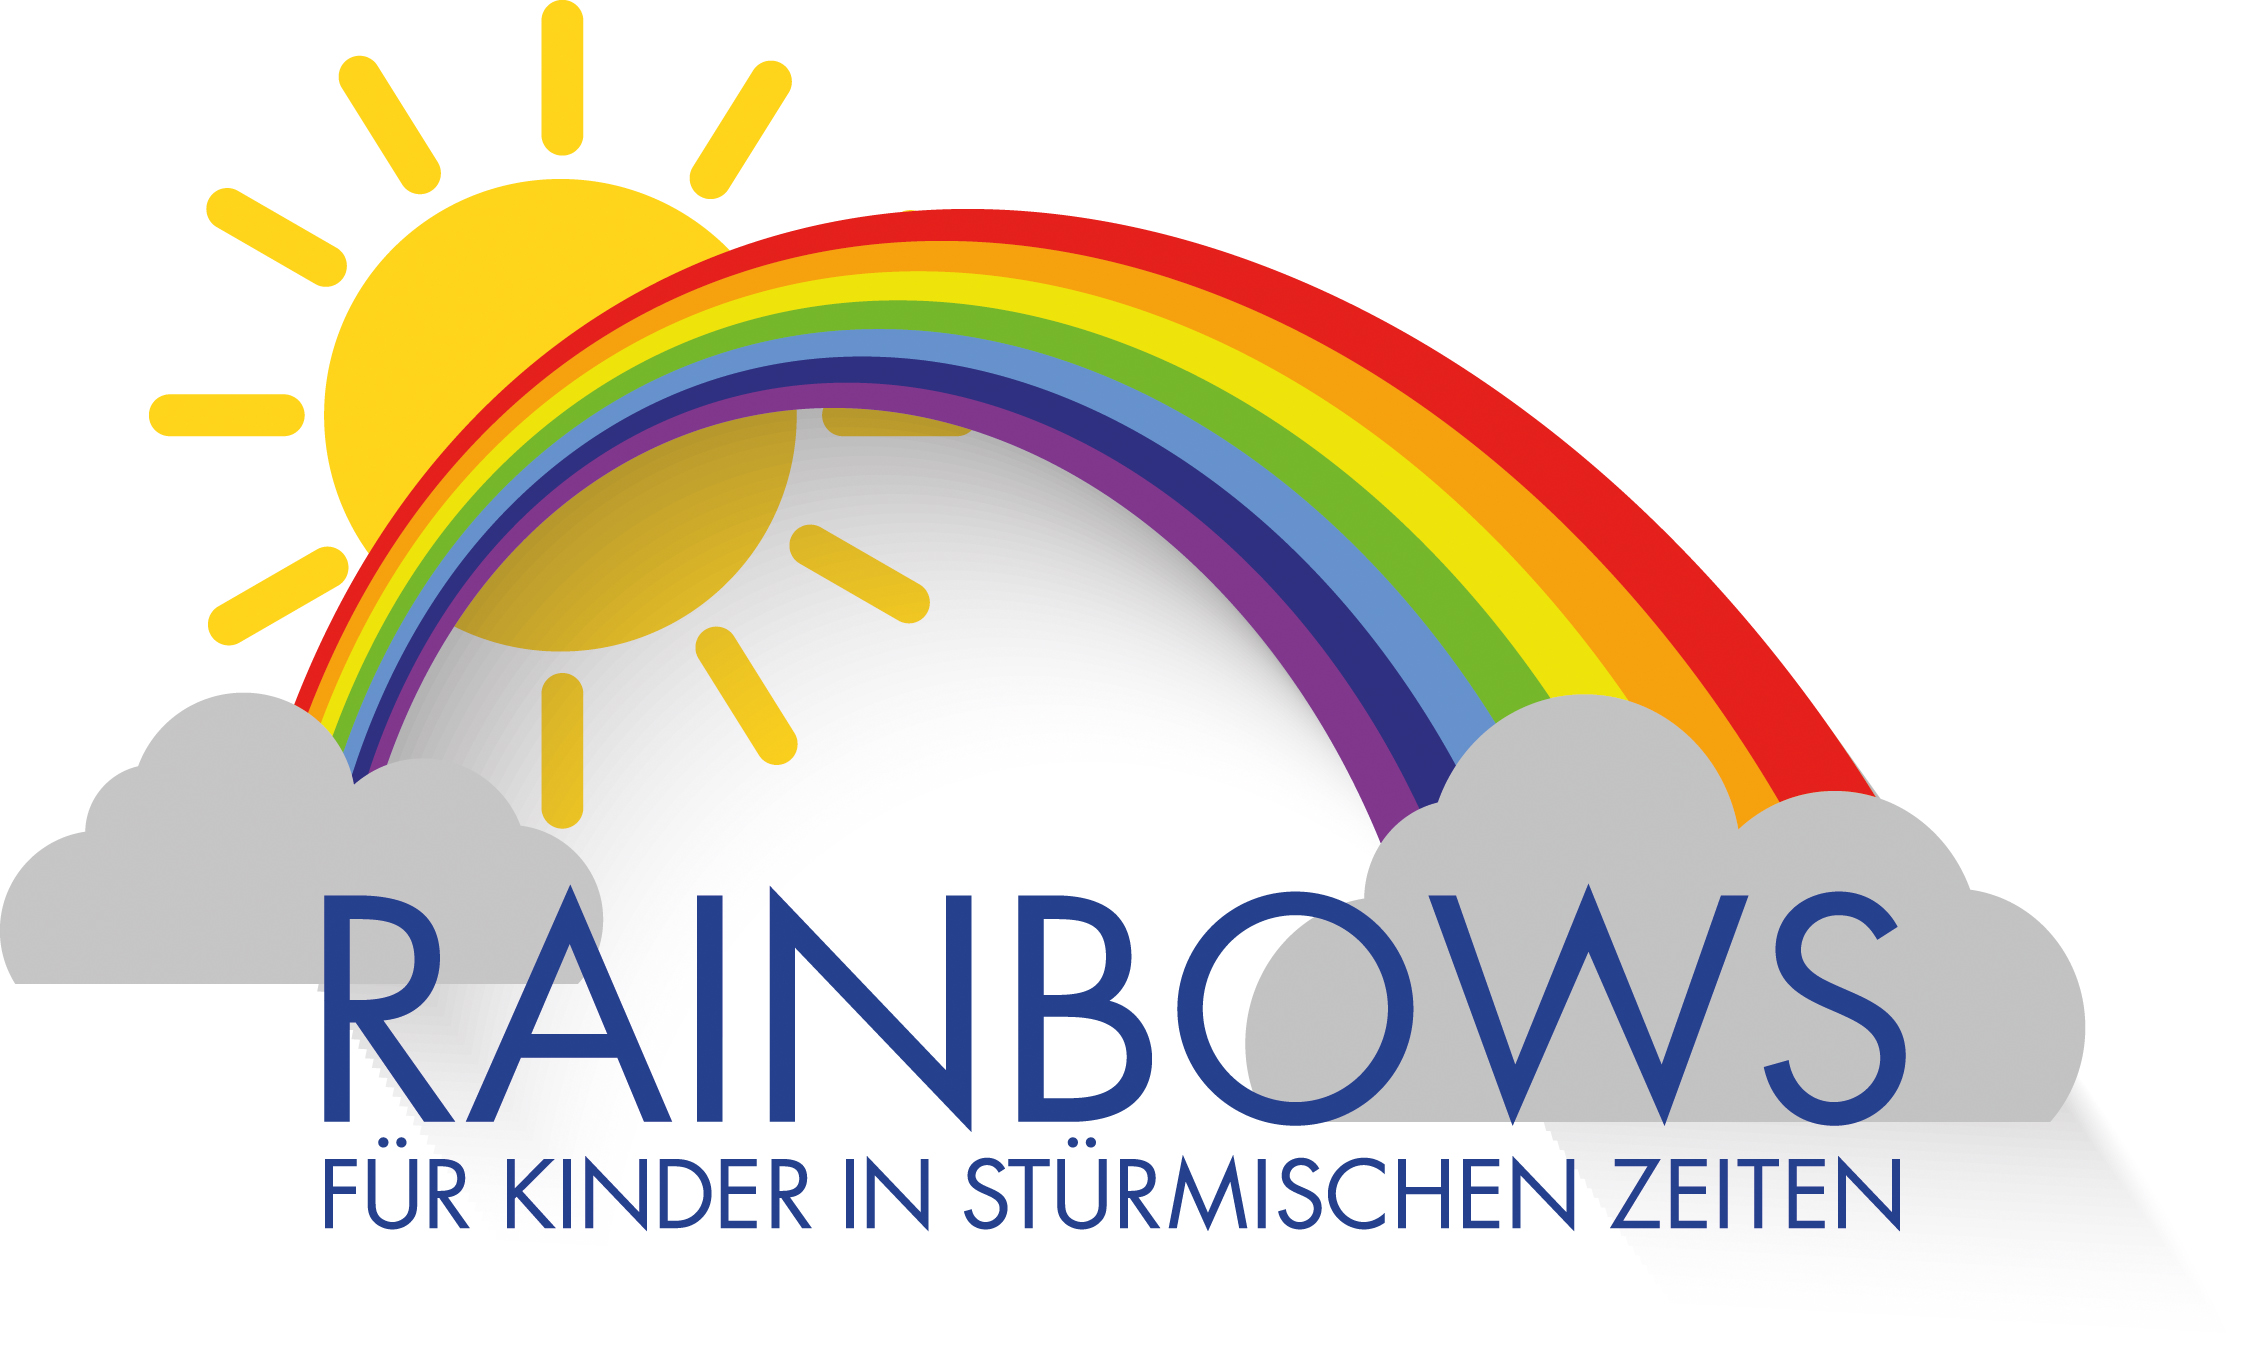 RainbowsLogo_BauBogendklWolke